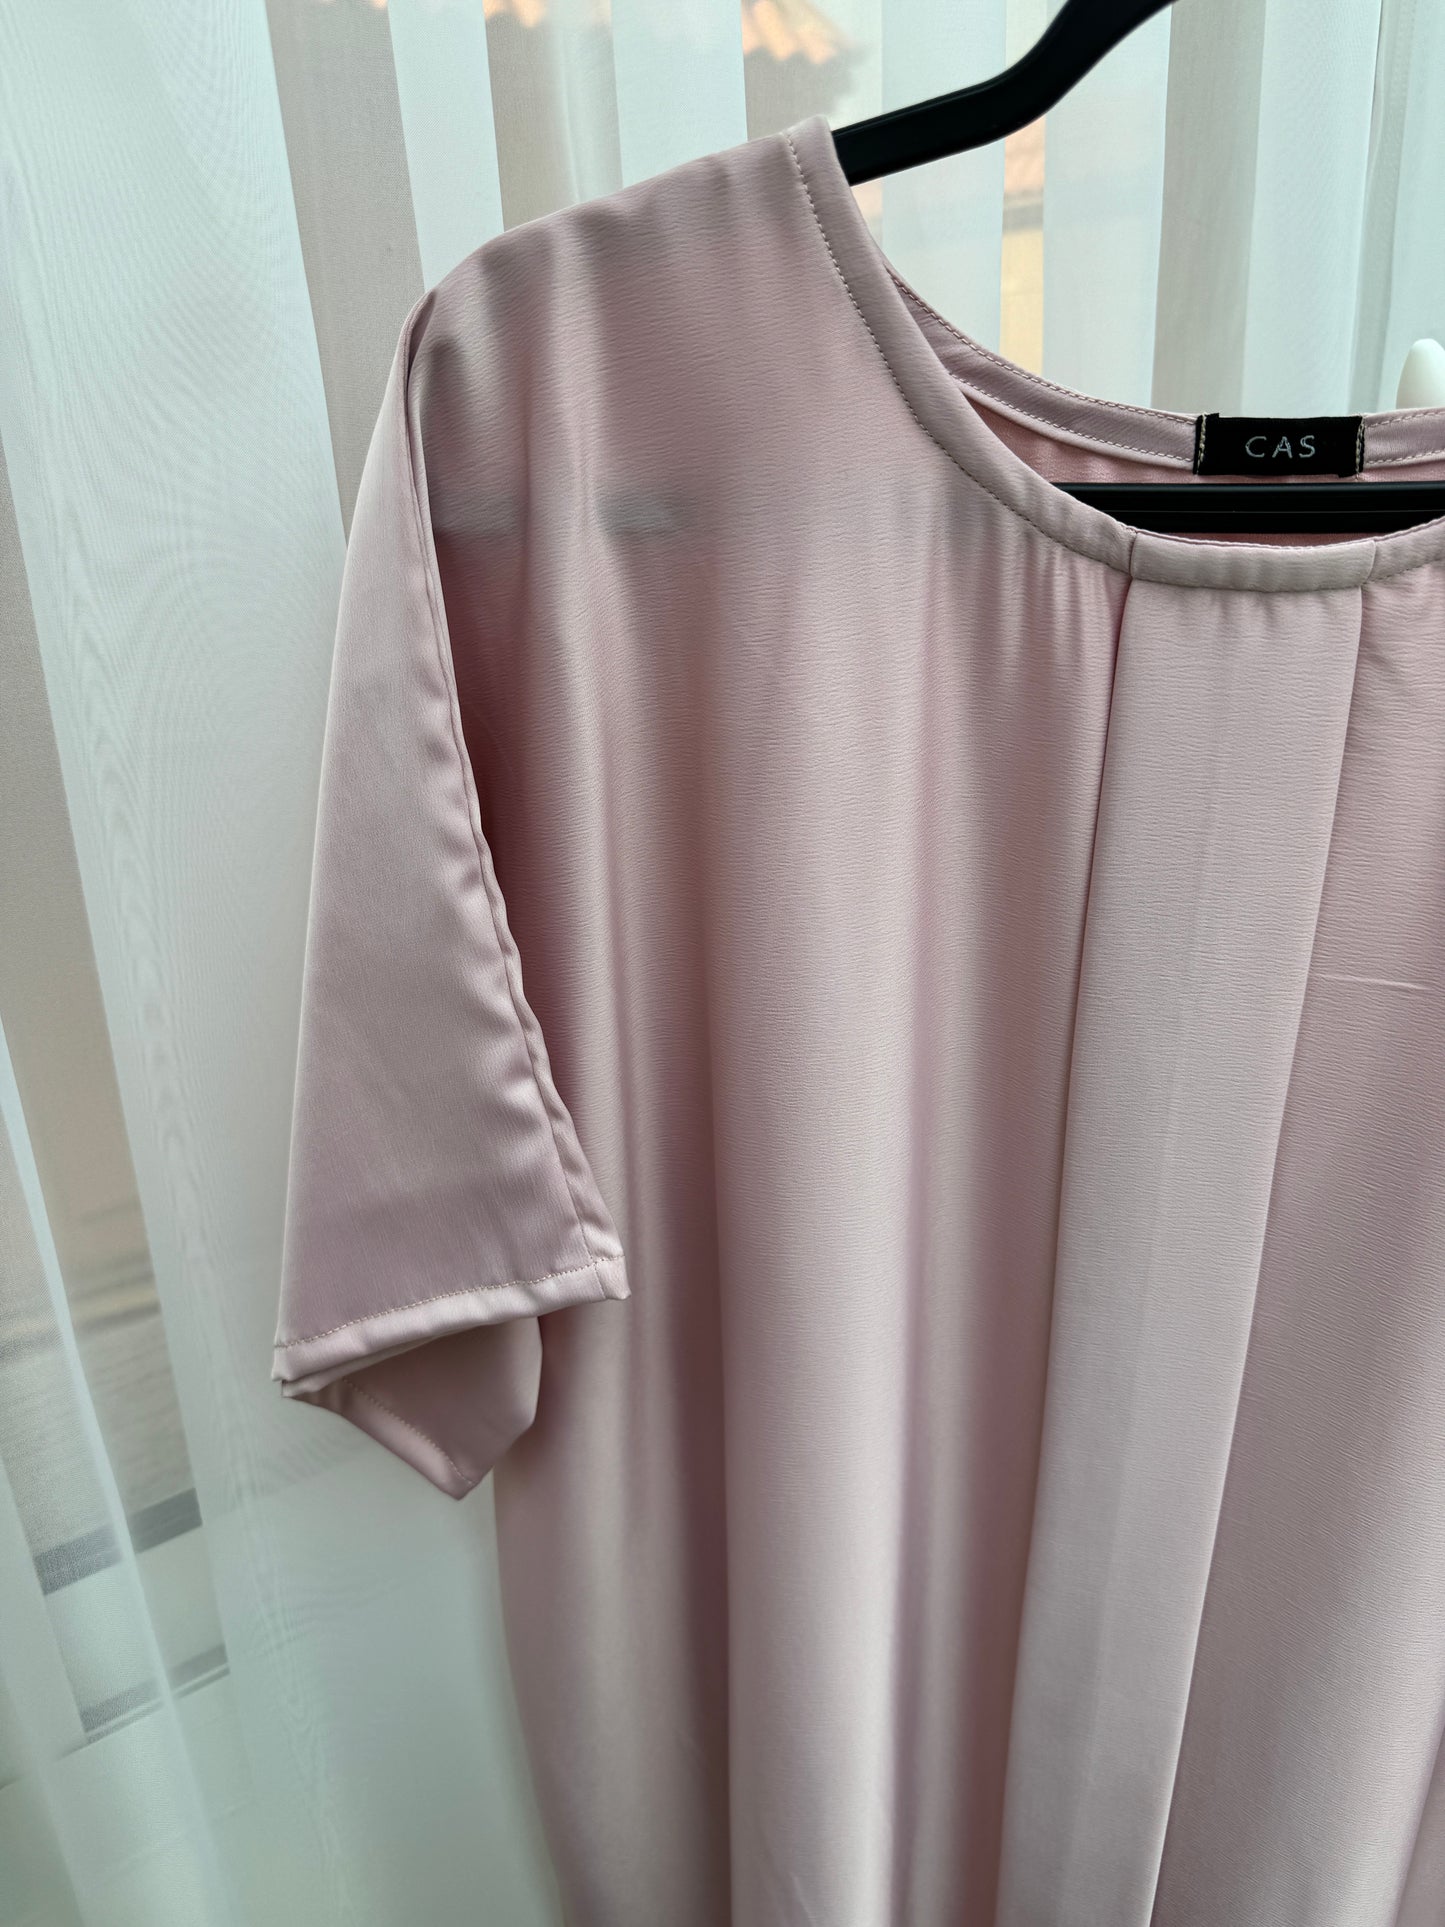 C Pink Under Abaya Dress